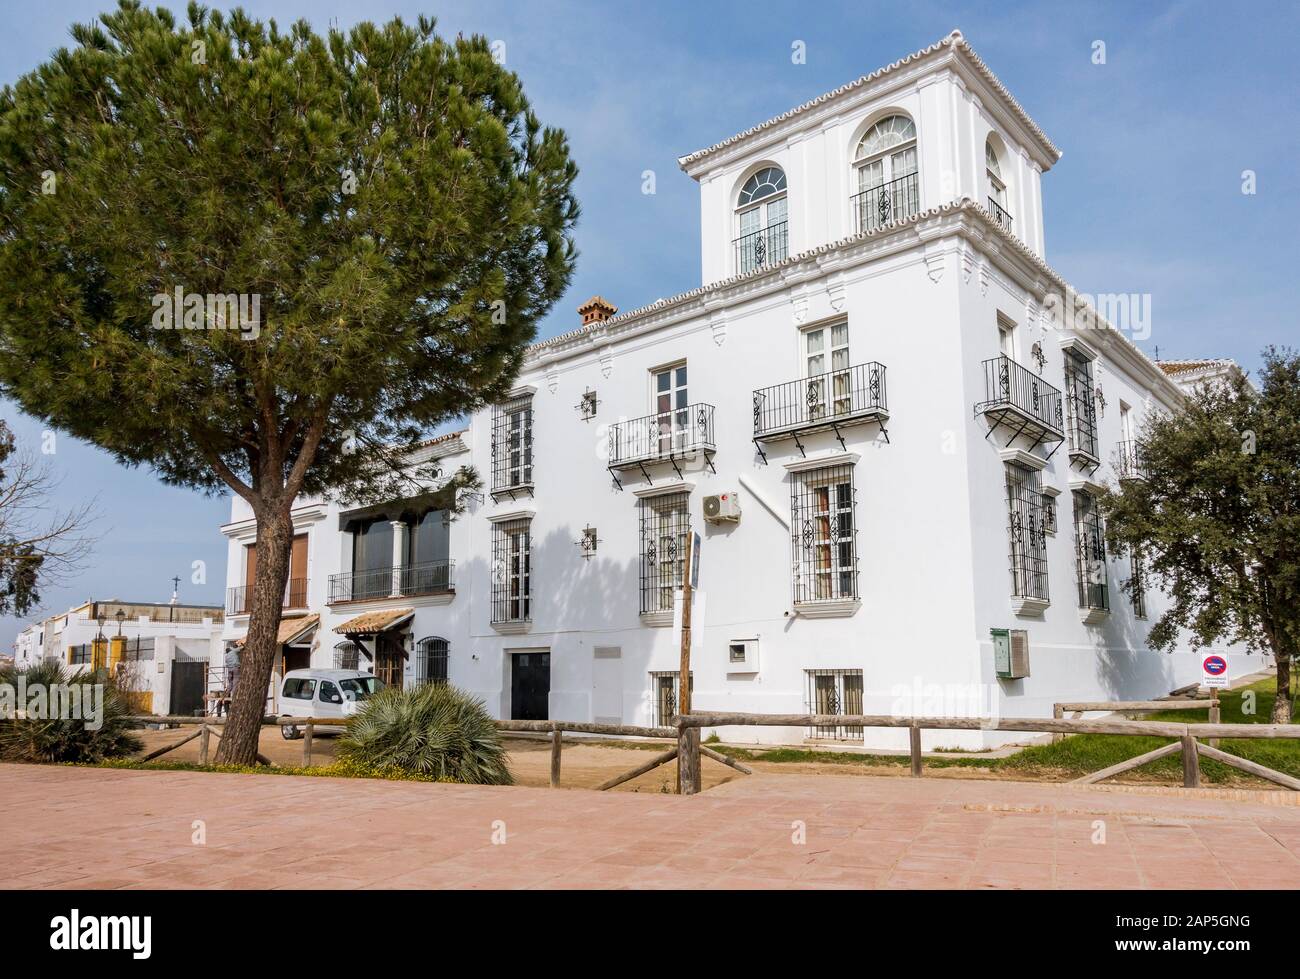 Hotel Toruño im weißen Dorf El Rocio, Nationalpark Doñana, Huelva, Südspanien. Stockfoto